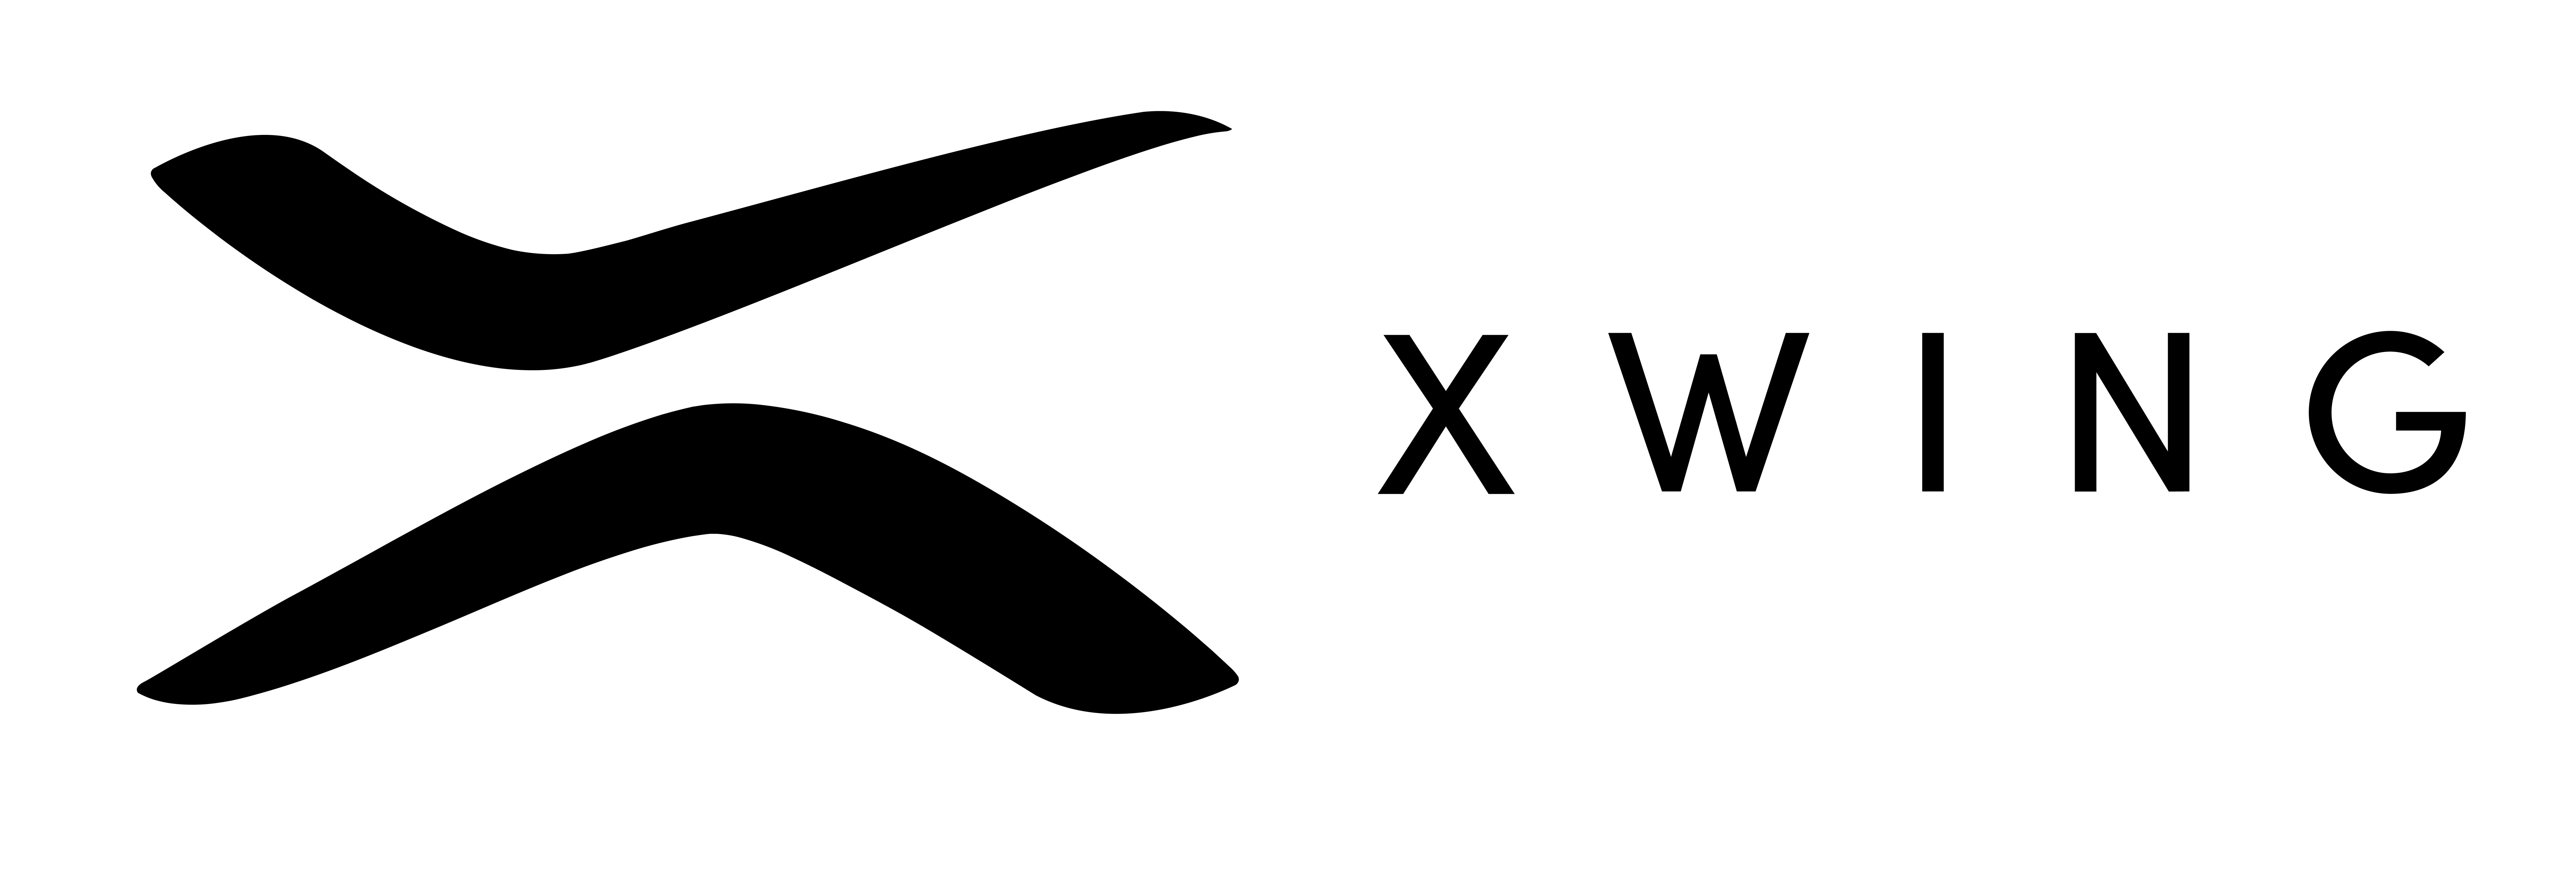 Xwing logo, Get Us PPE partner